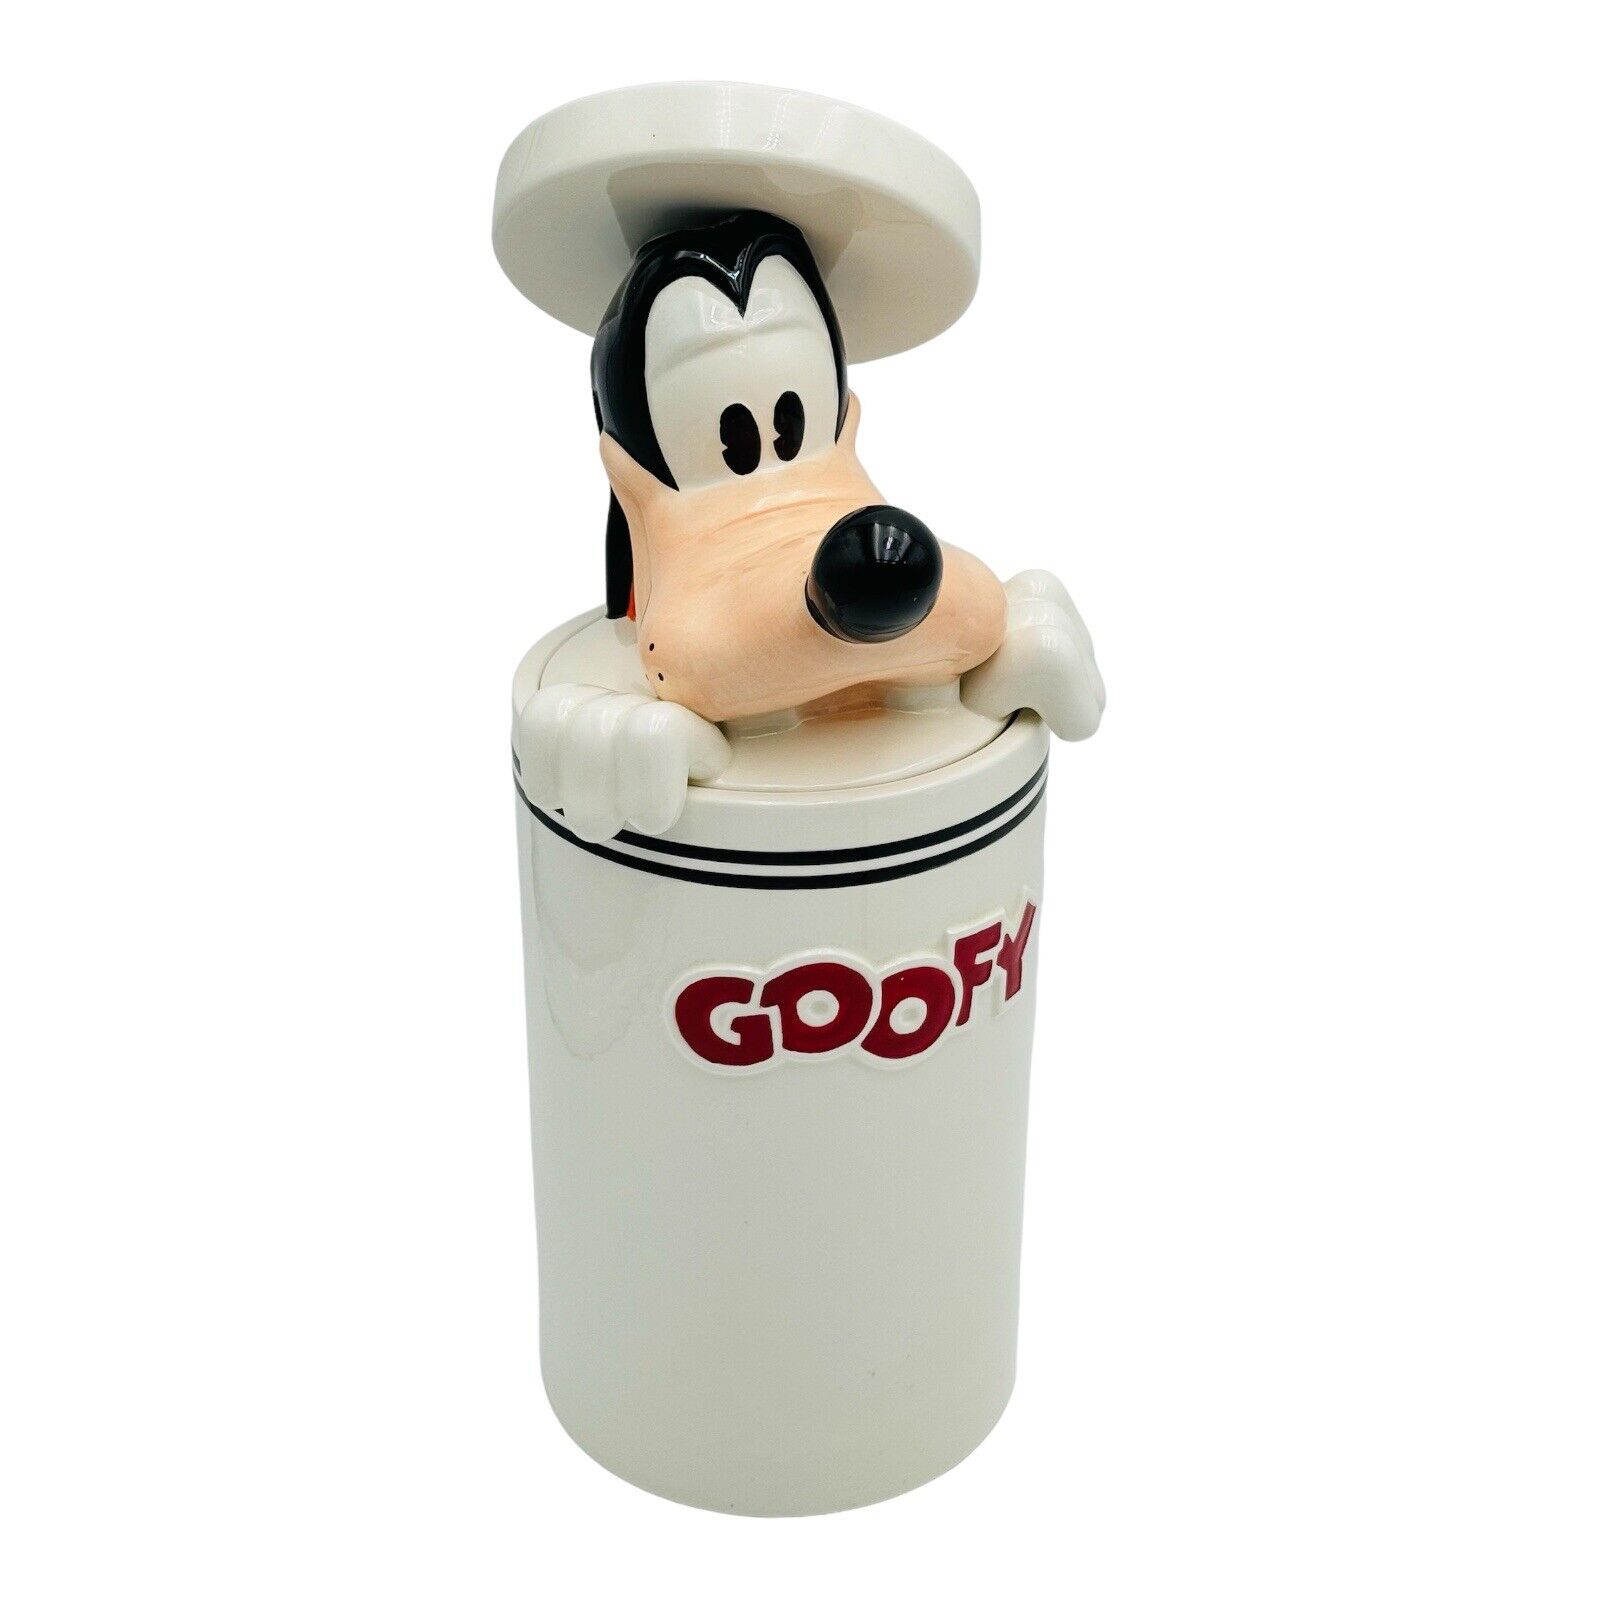 Walt Disney Direct Peek A Boo Goofy Ceramic Cookie Jar Canister